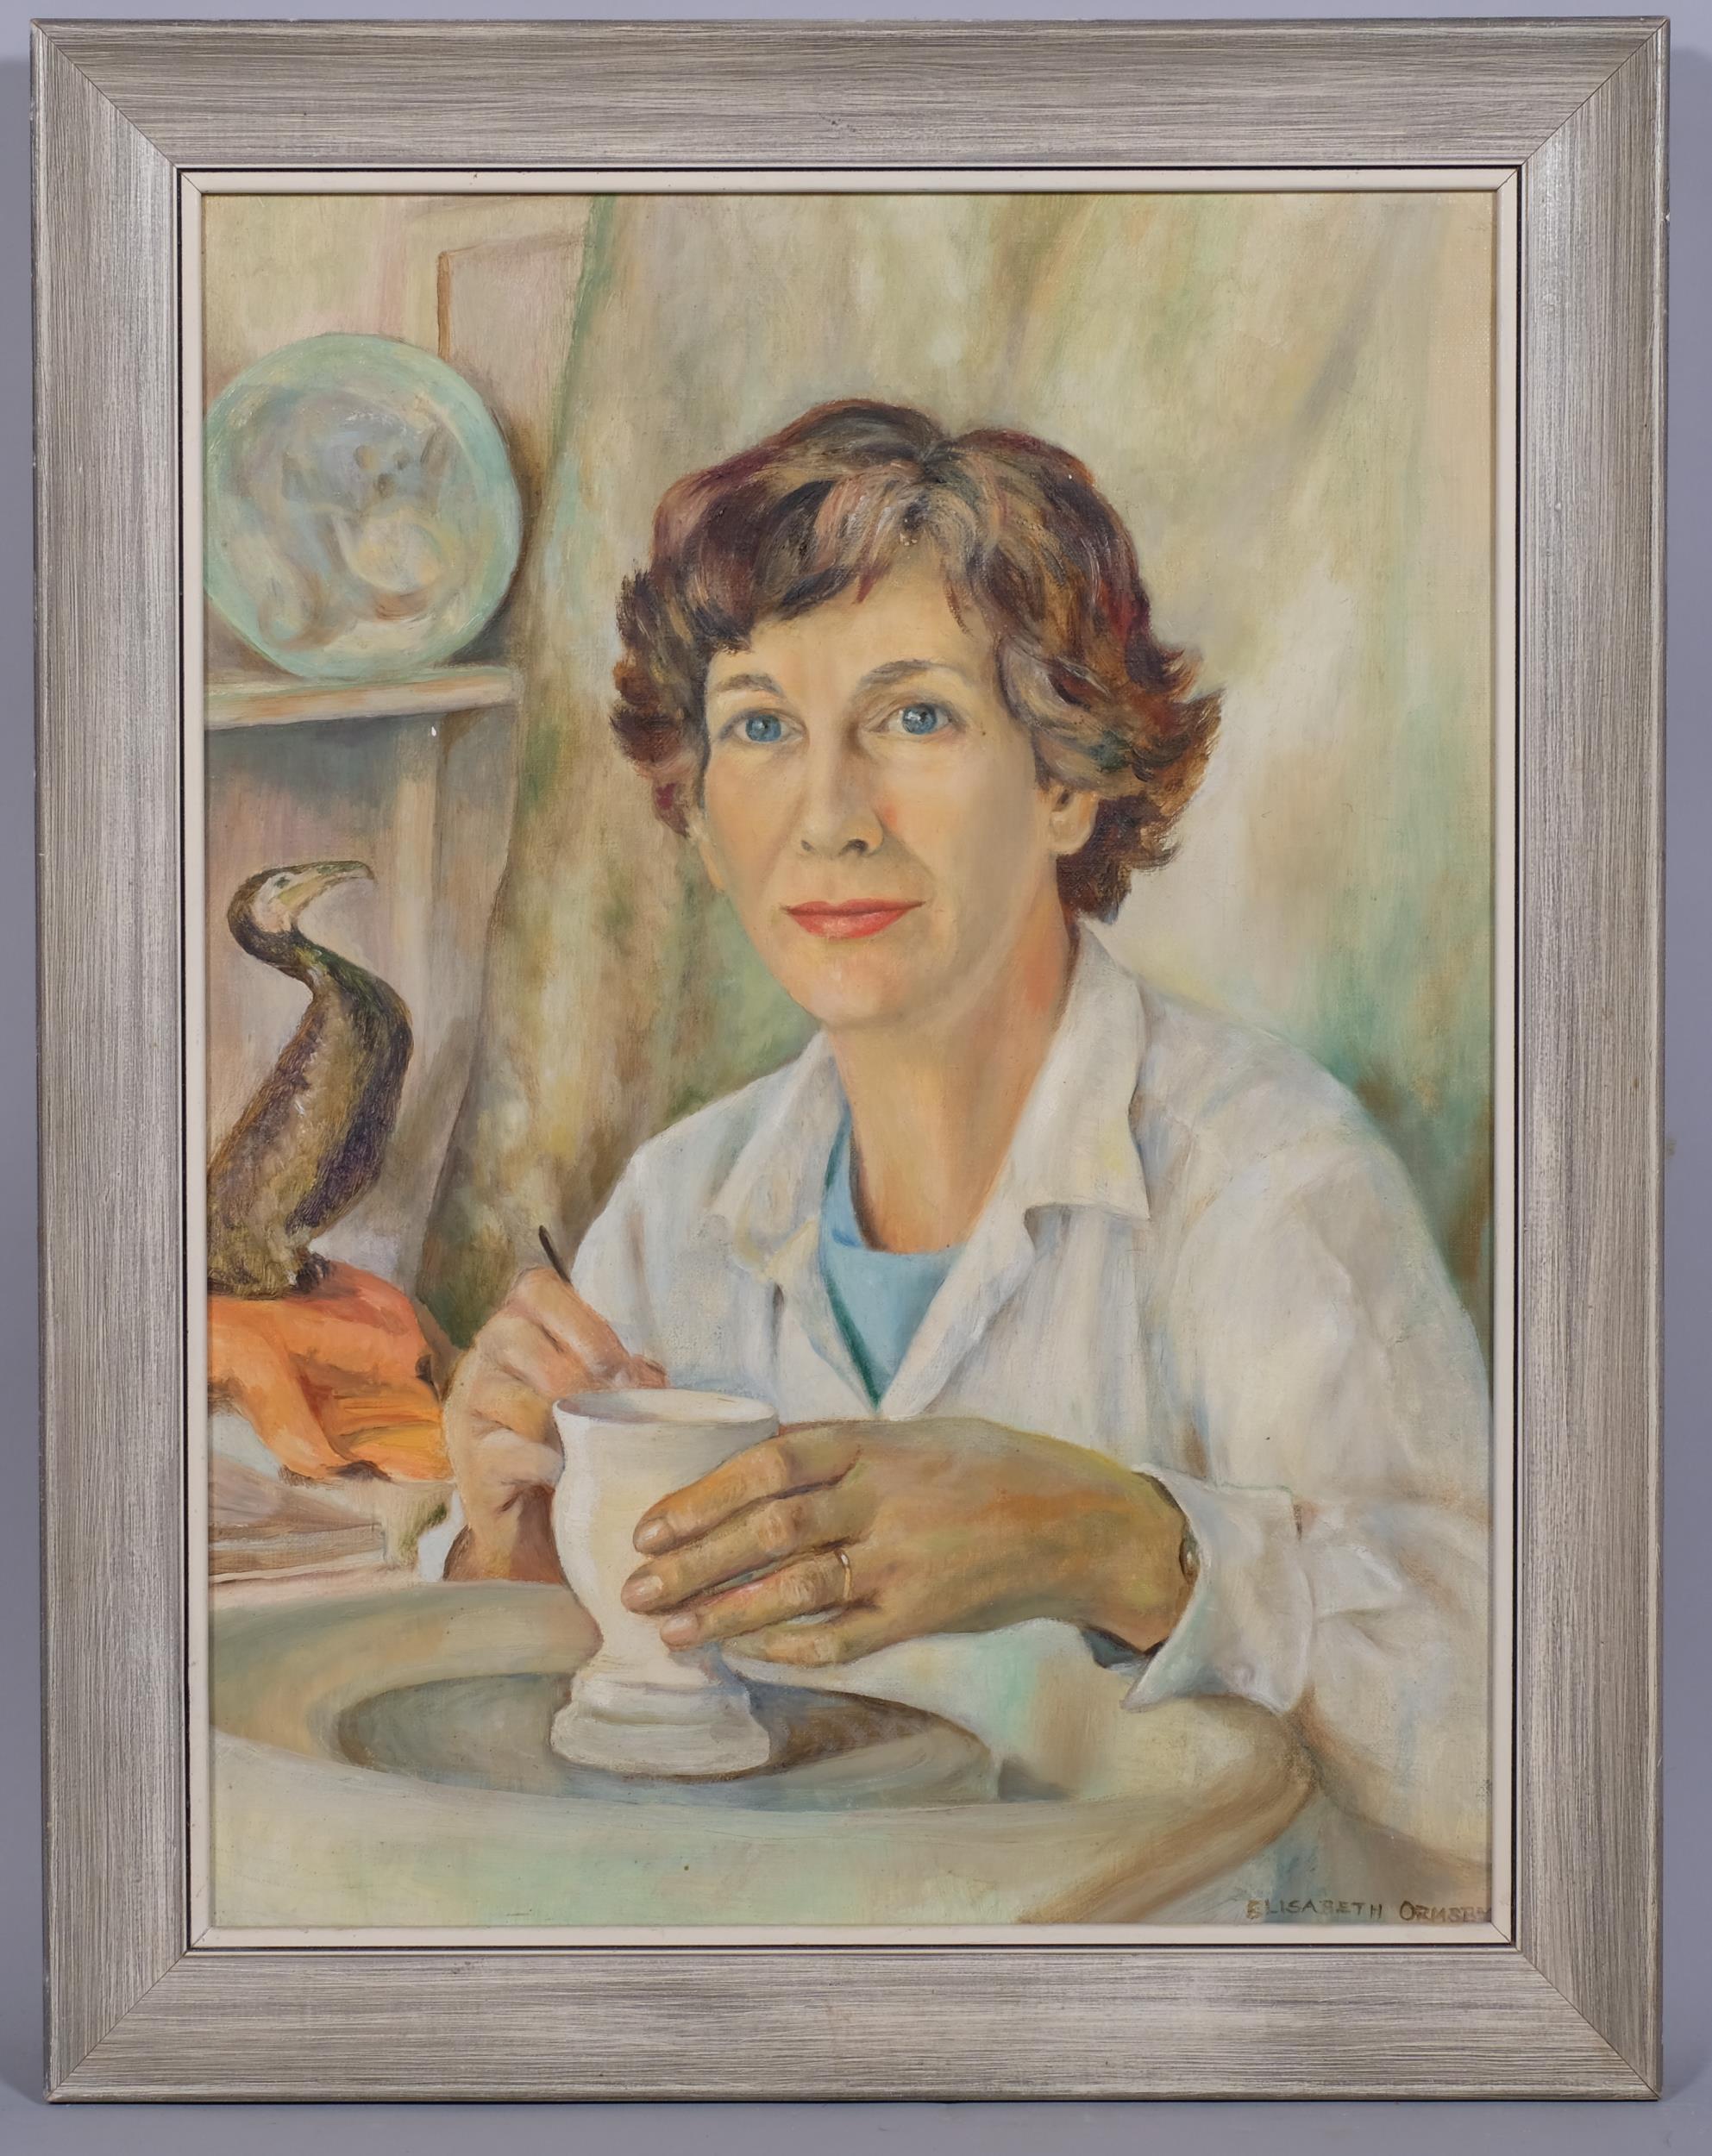 Elizabeth Ormsey, portrait of a potter, oil on canvas, 60cm x 44cm, framed Good condition